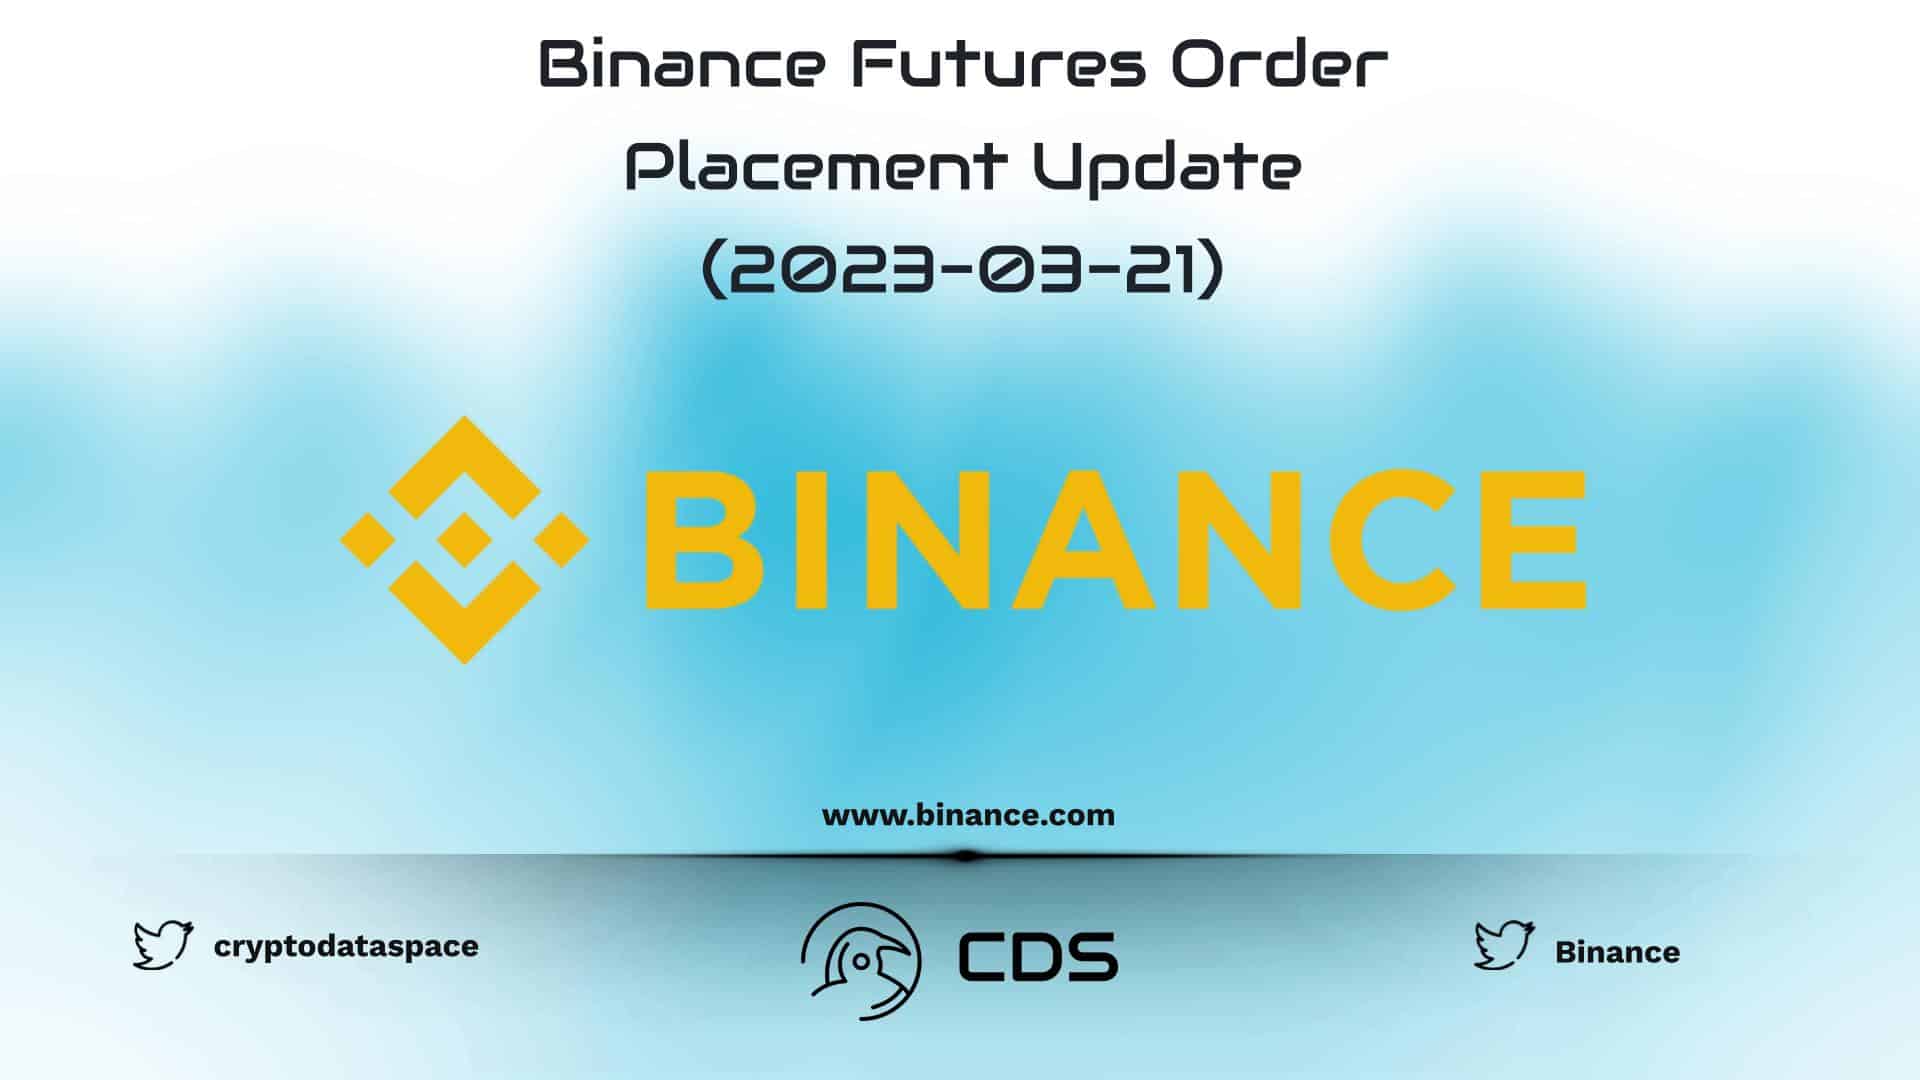 Binance Futures Order Placement Update (2023-03-21)